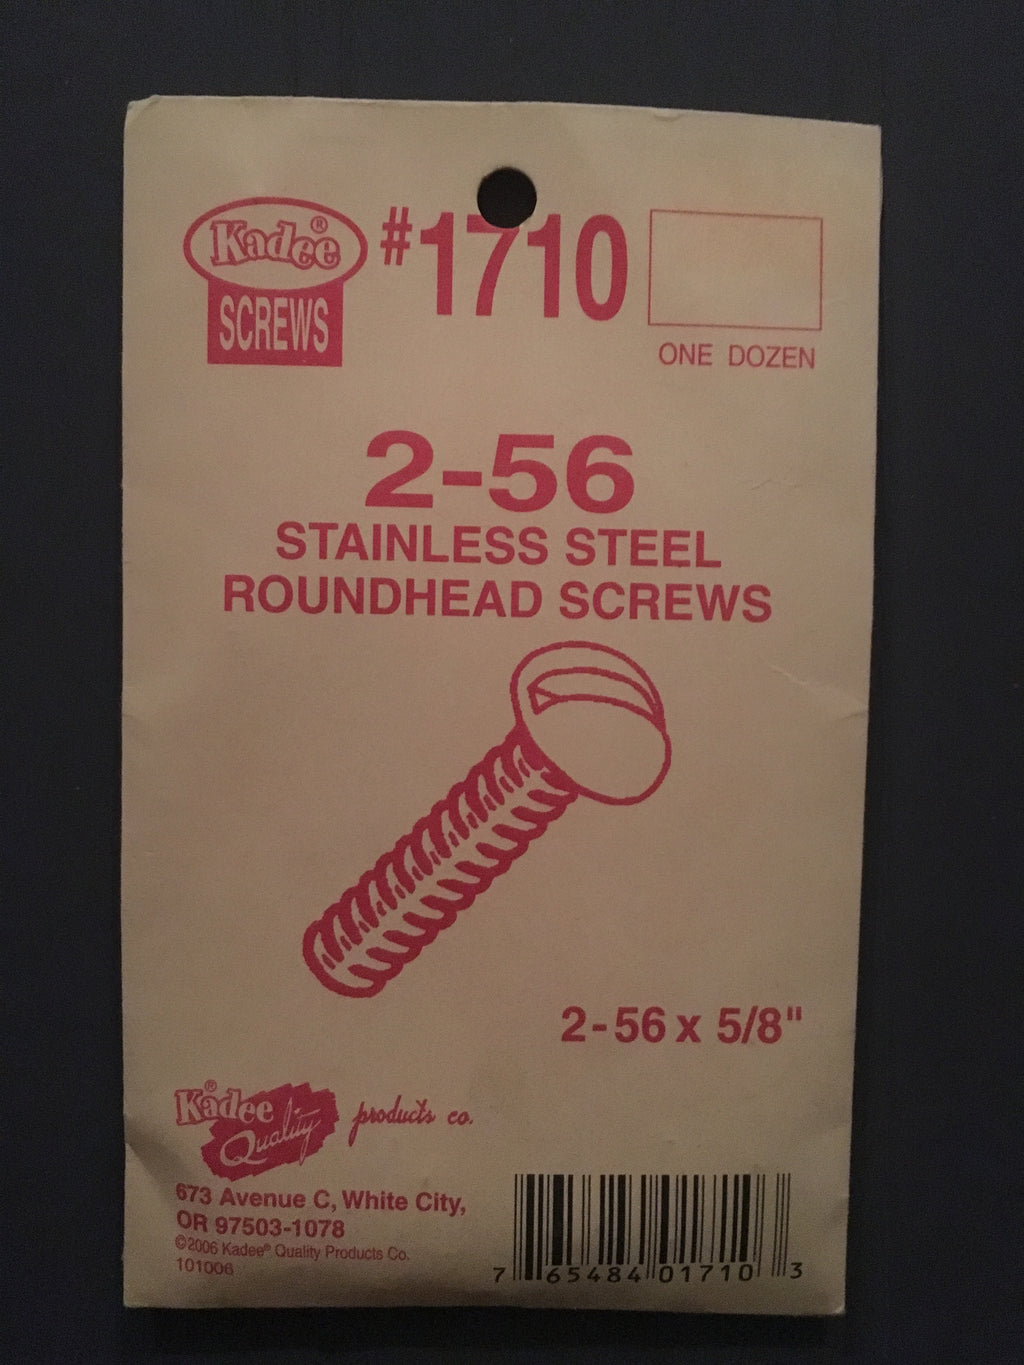 #1710 (2-56 x 5/8) Stainless Steel Roundhead Screws